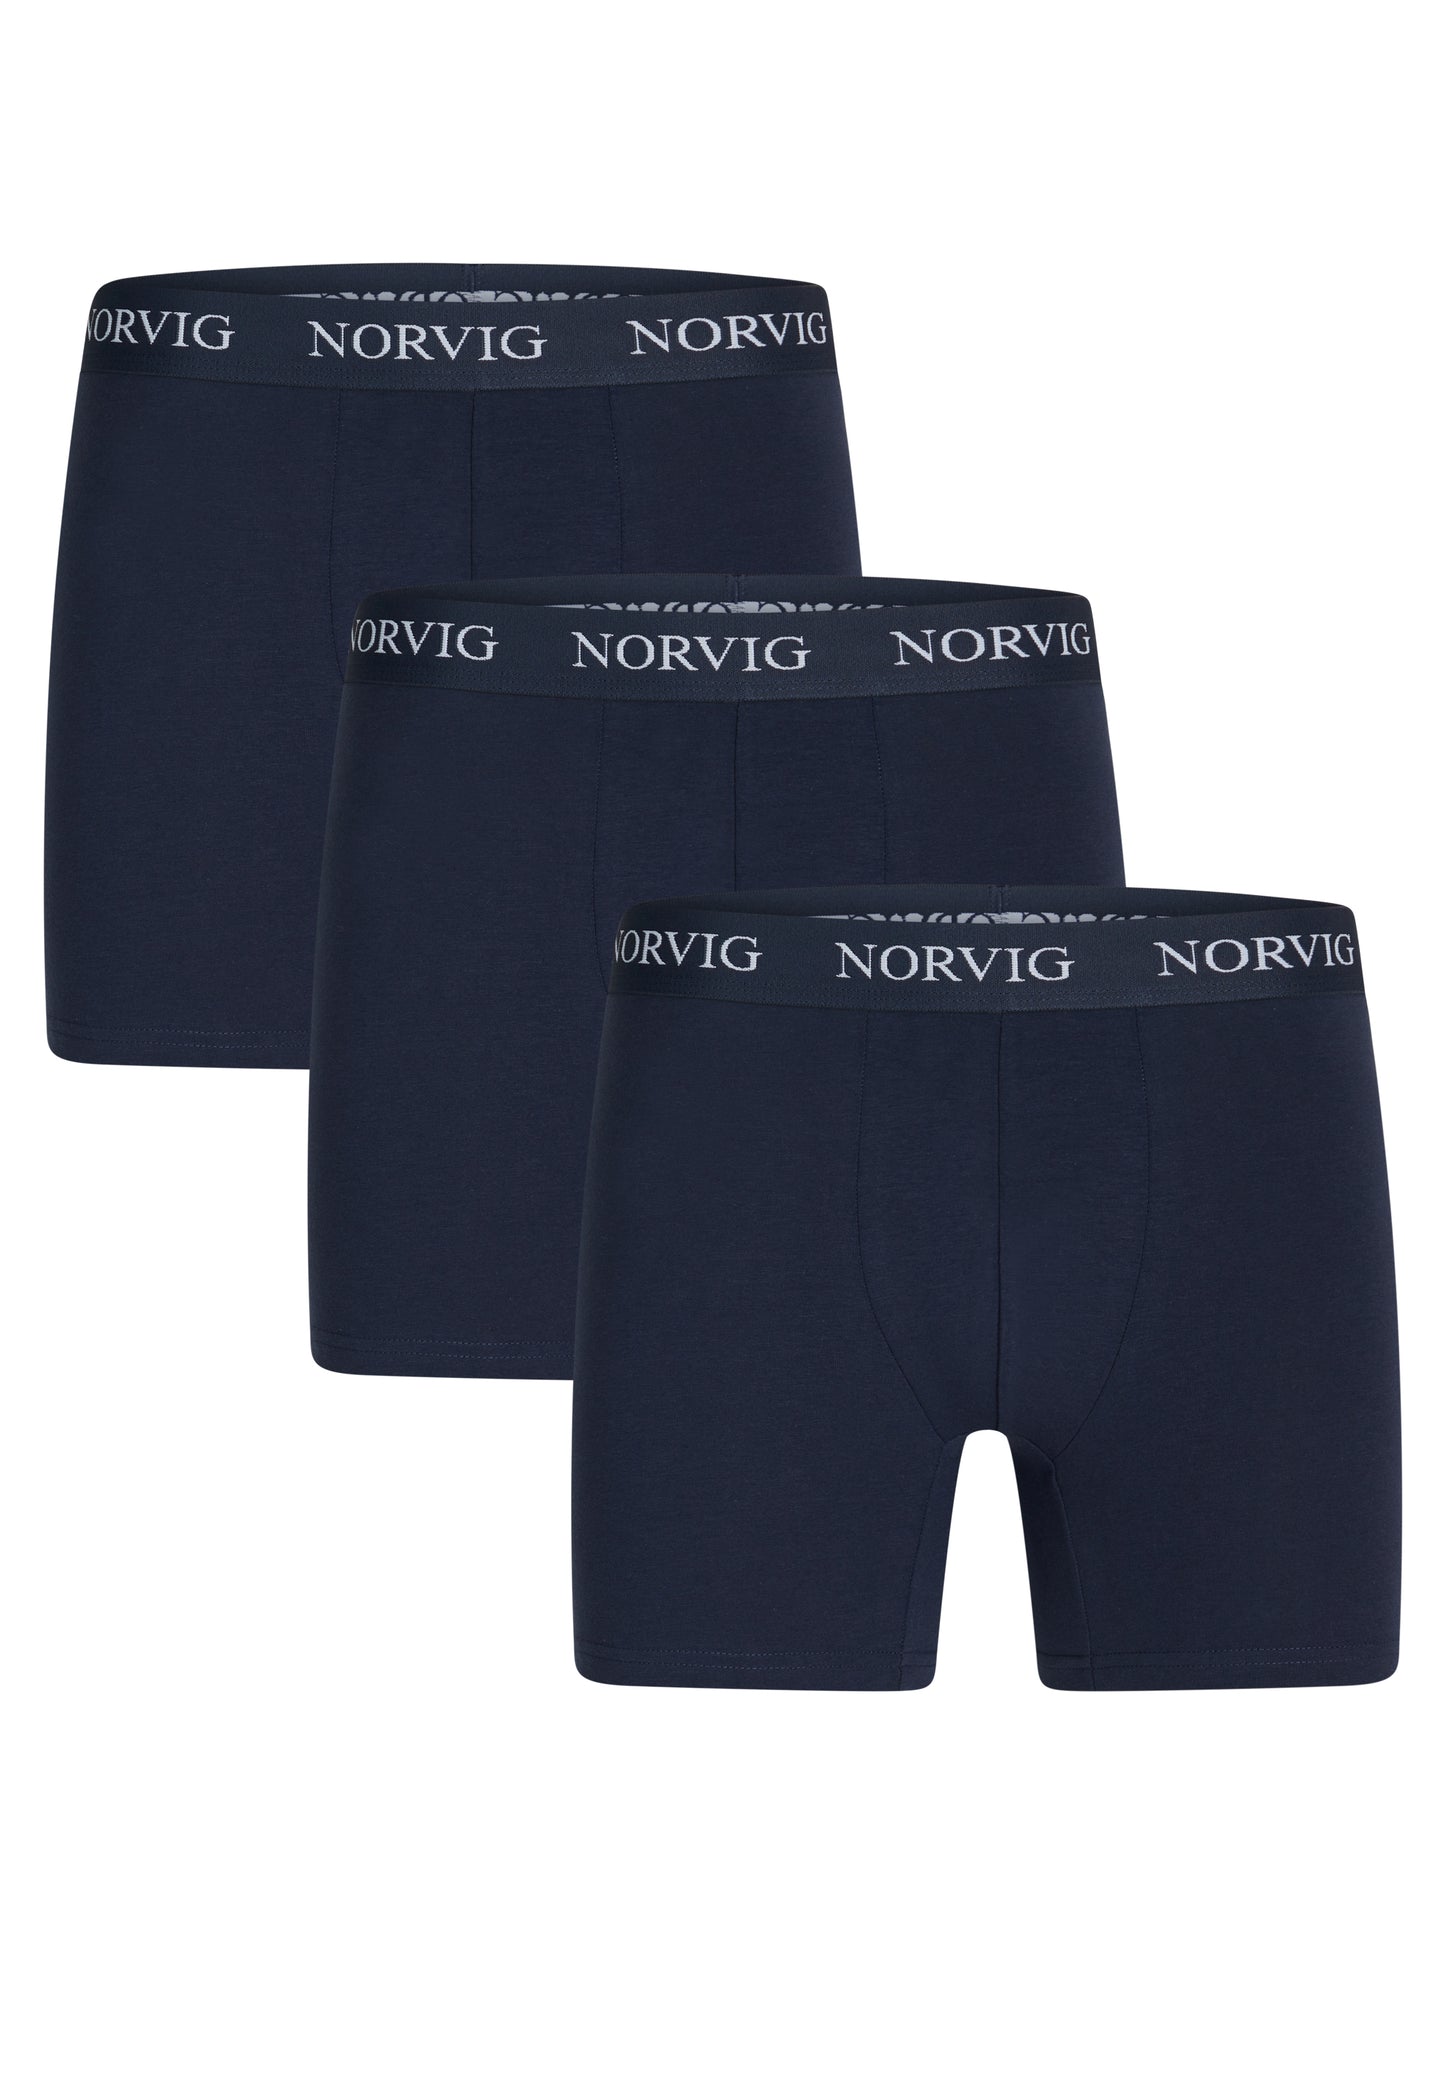 NORVIG 3-pak Tights navy